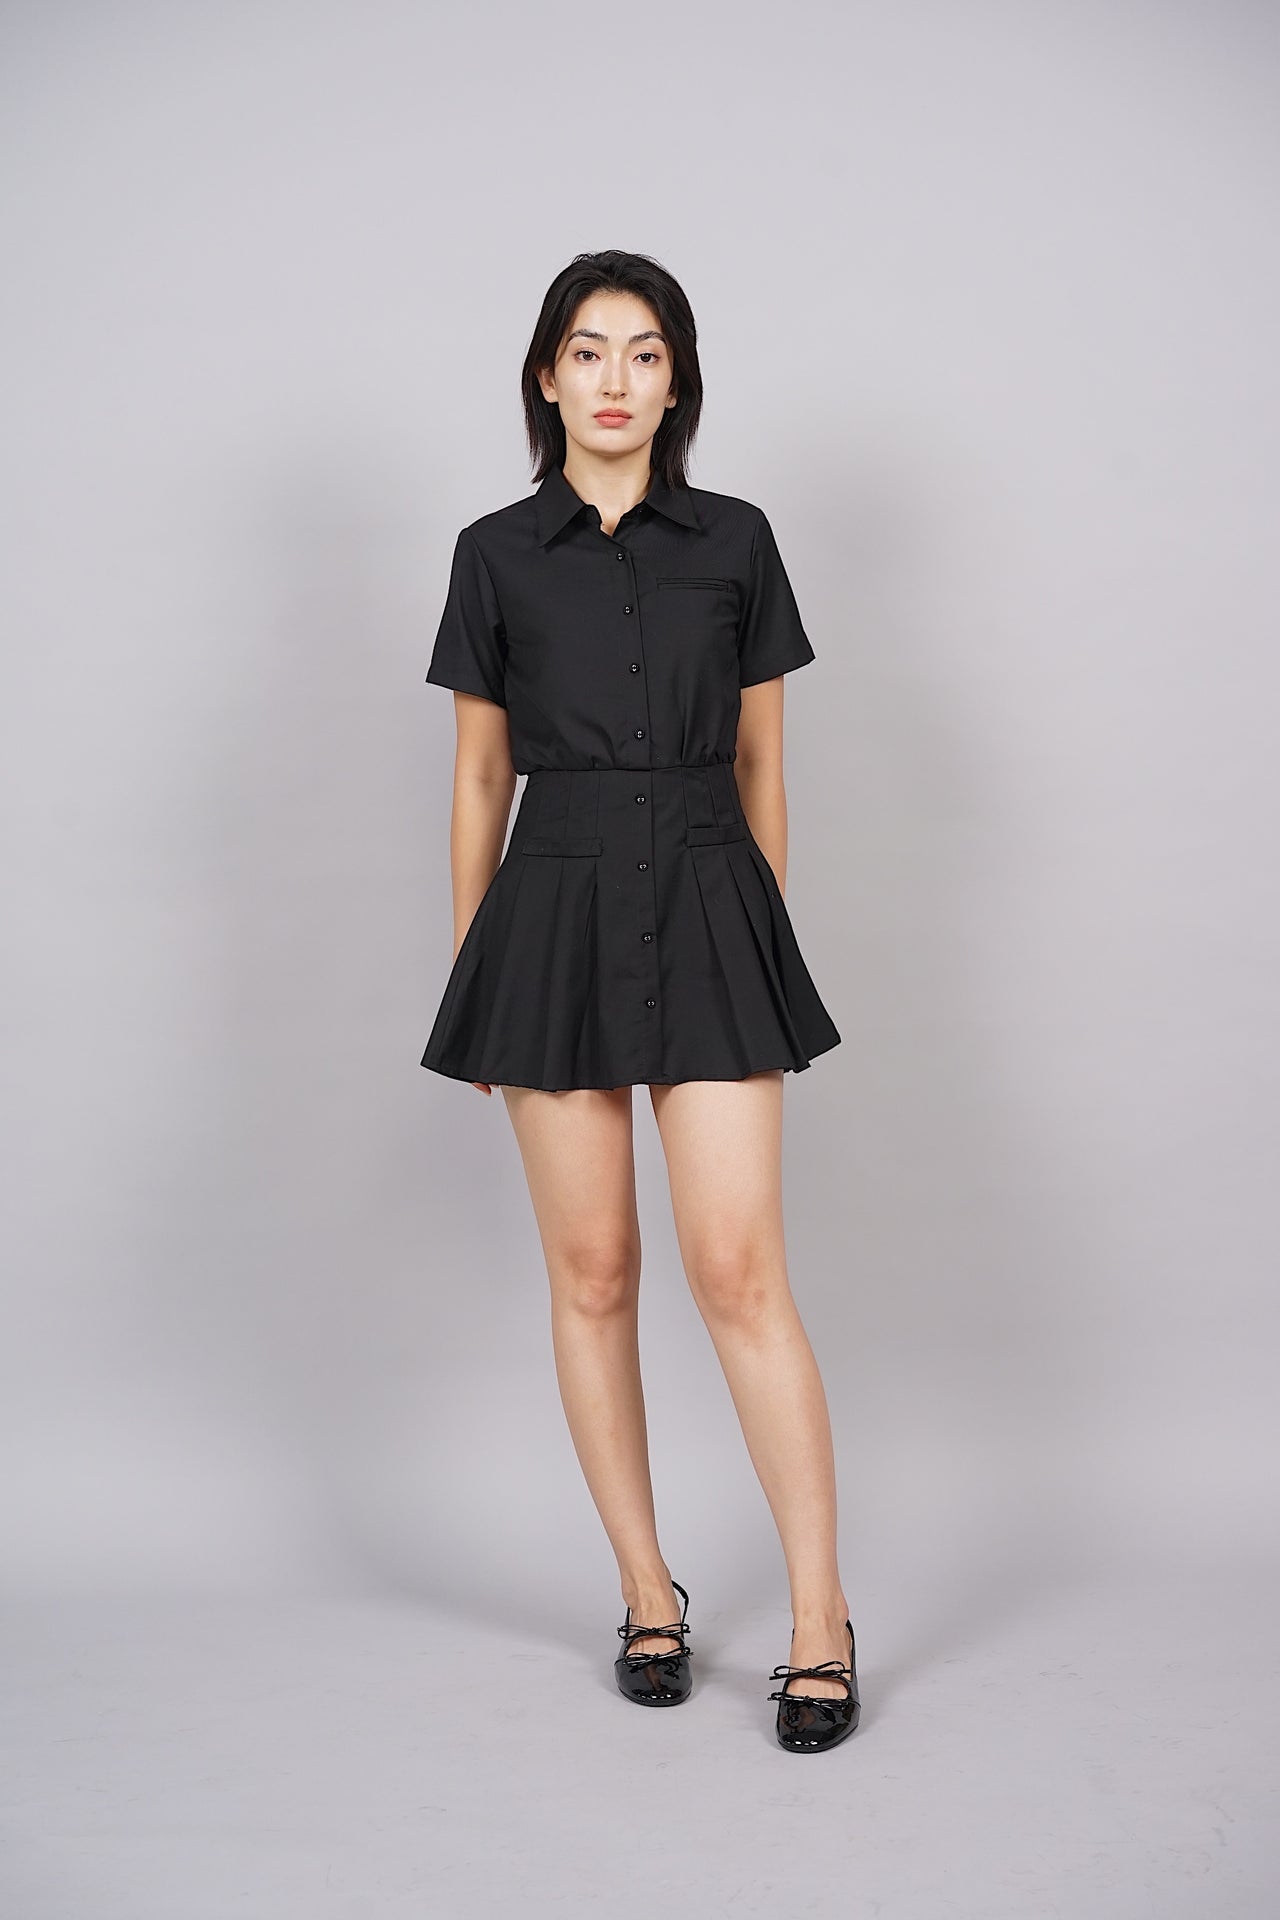 EVERYDAY / Judson Mini Dress in Black